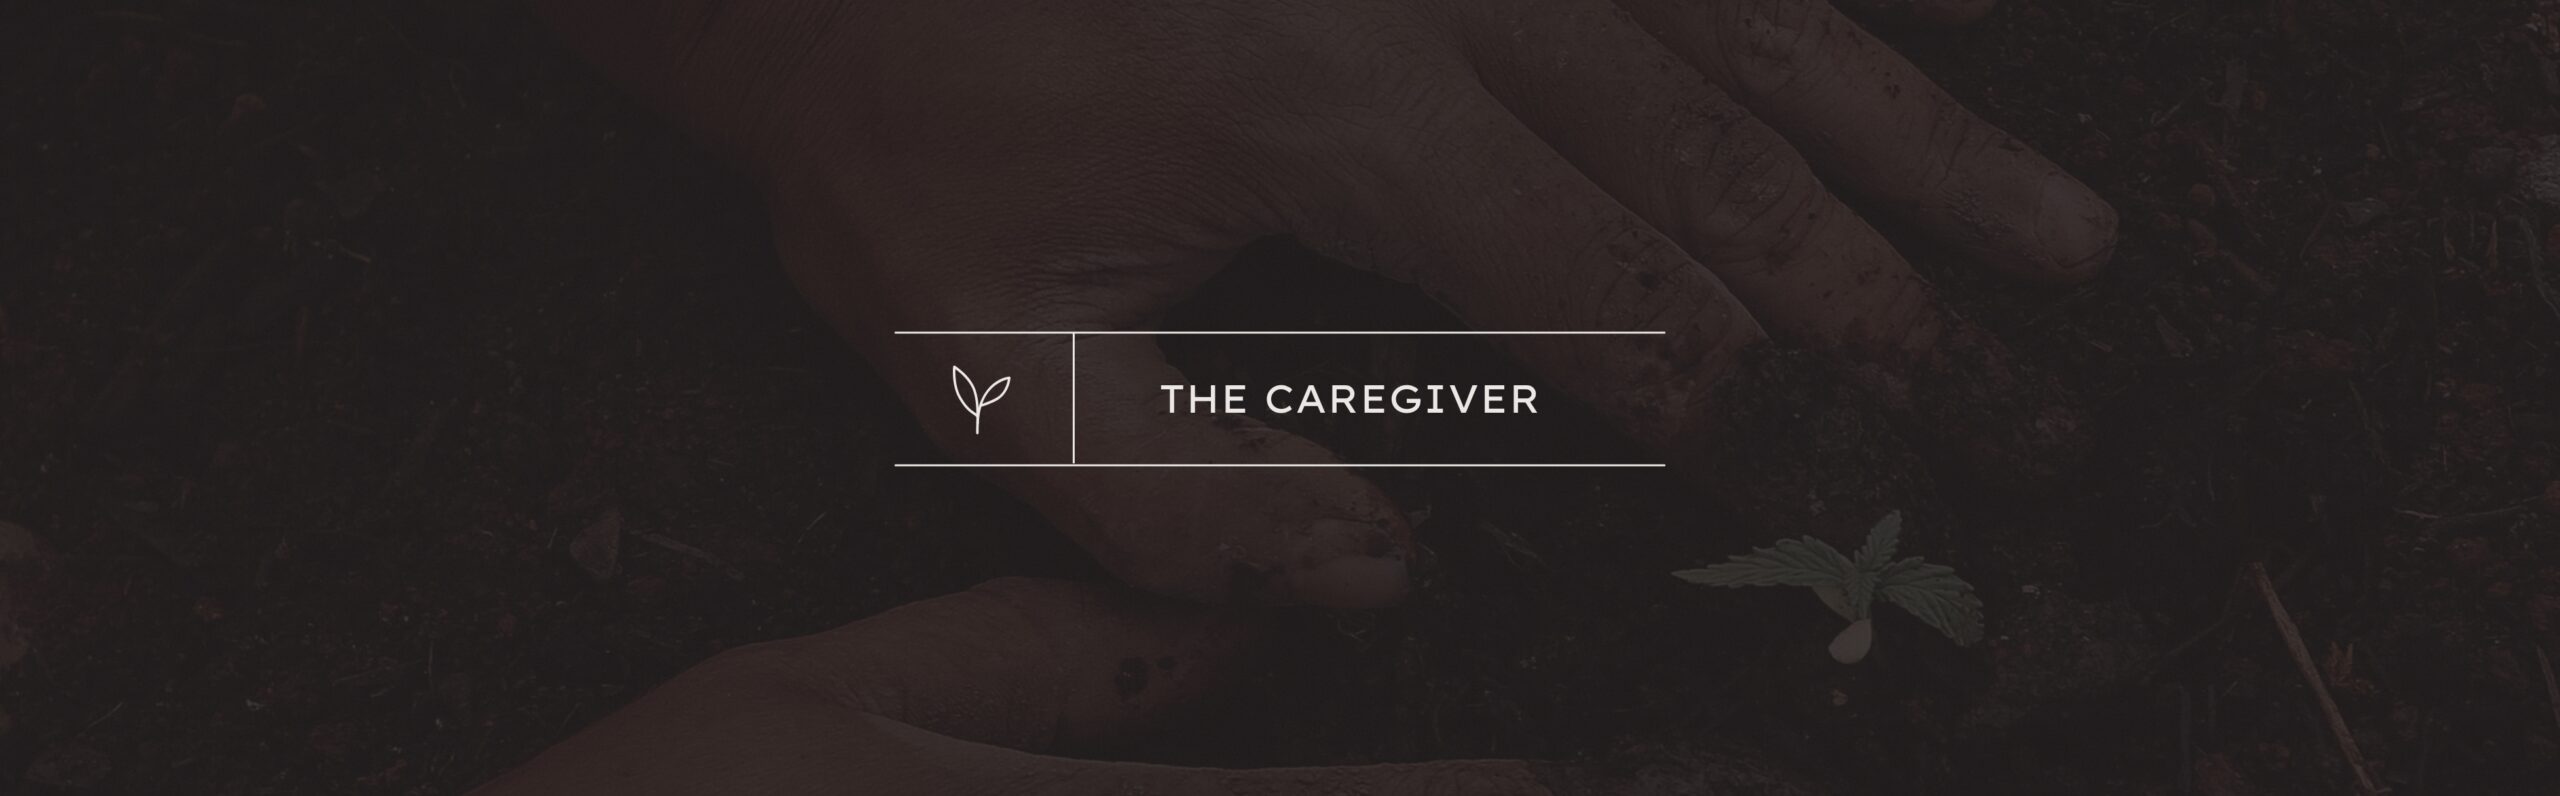 The Caregiver Brand Archetype - Astute Communications